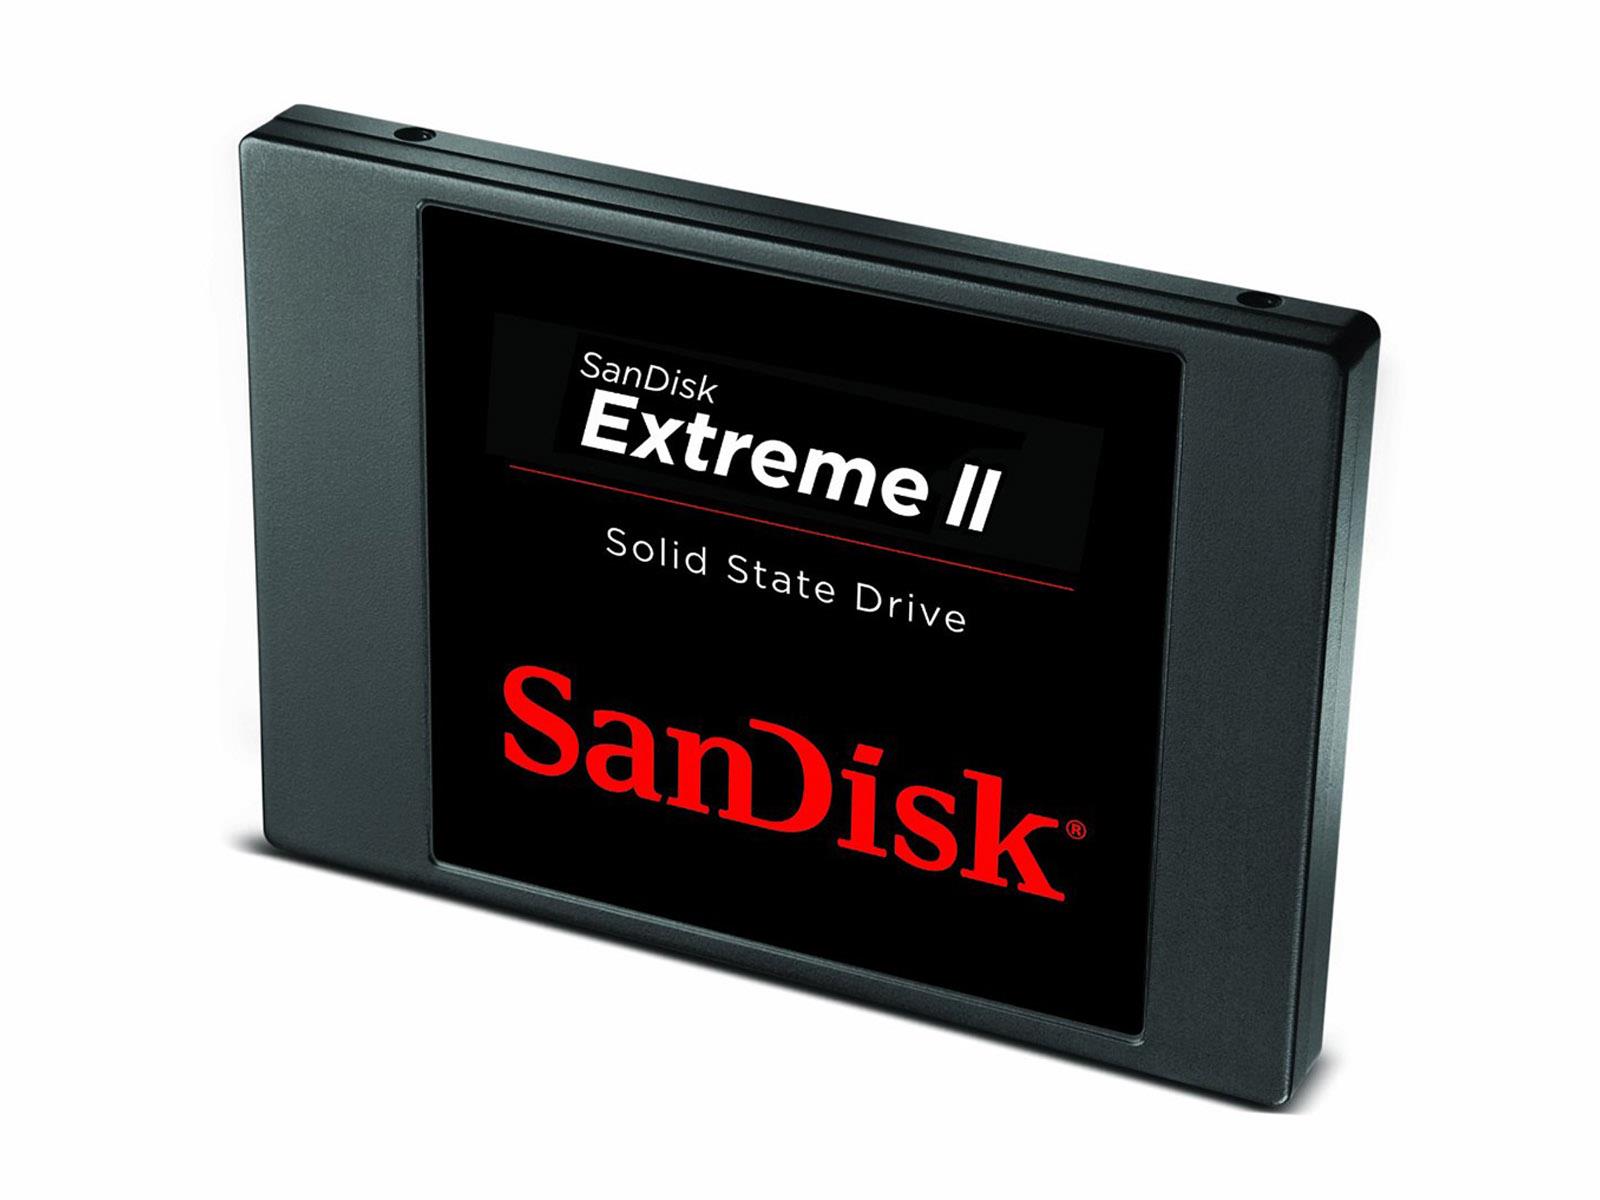 Sandisk Extreme II 120gb SSD